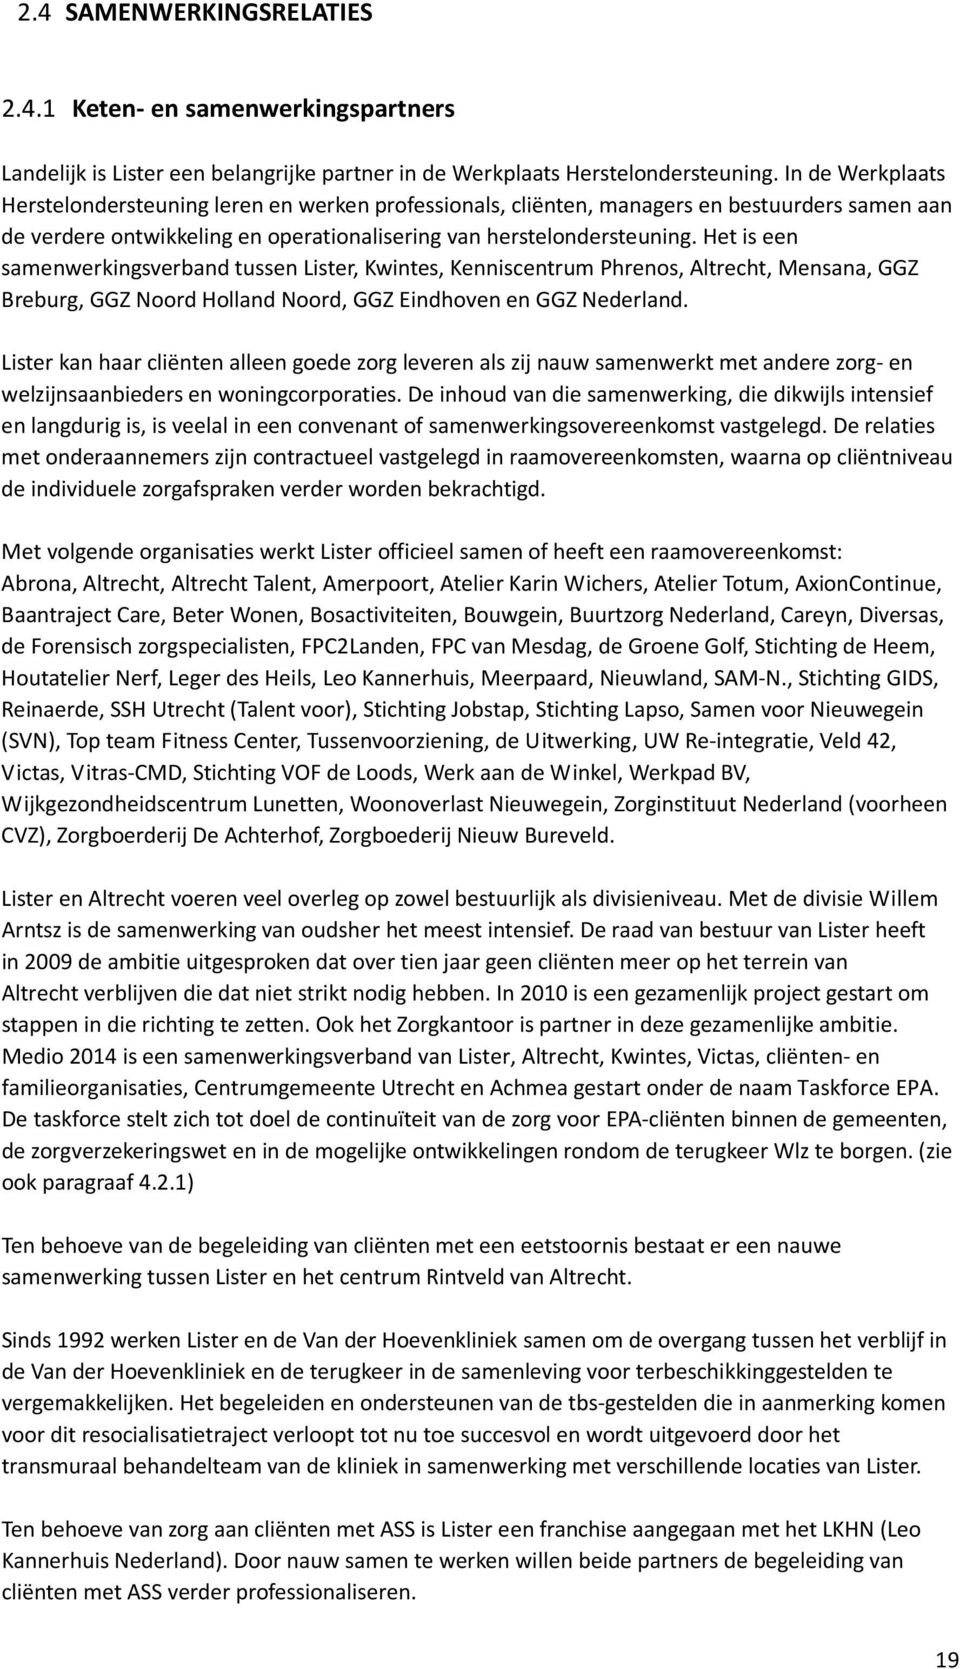 Het is een samenwerkingsverband tussen Lister, Kwintes, Kenniscentrum Phrenos, Altrecht, Mensana, GGZ Breburg, GGZ Noord Holland Noord, GGZ Eindhoven en GGZ Nederland.